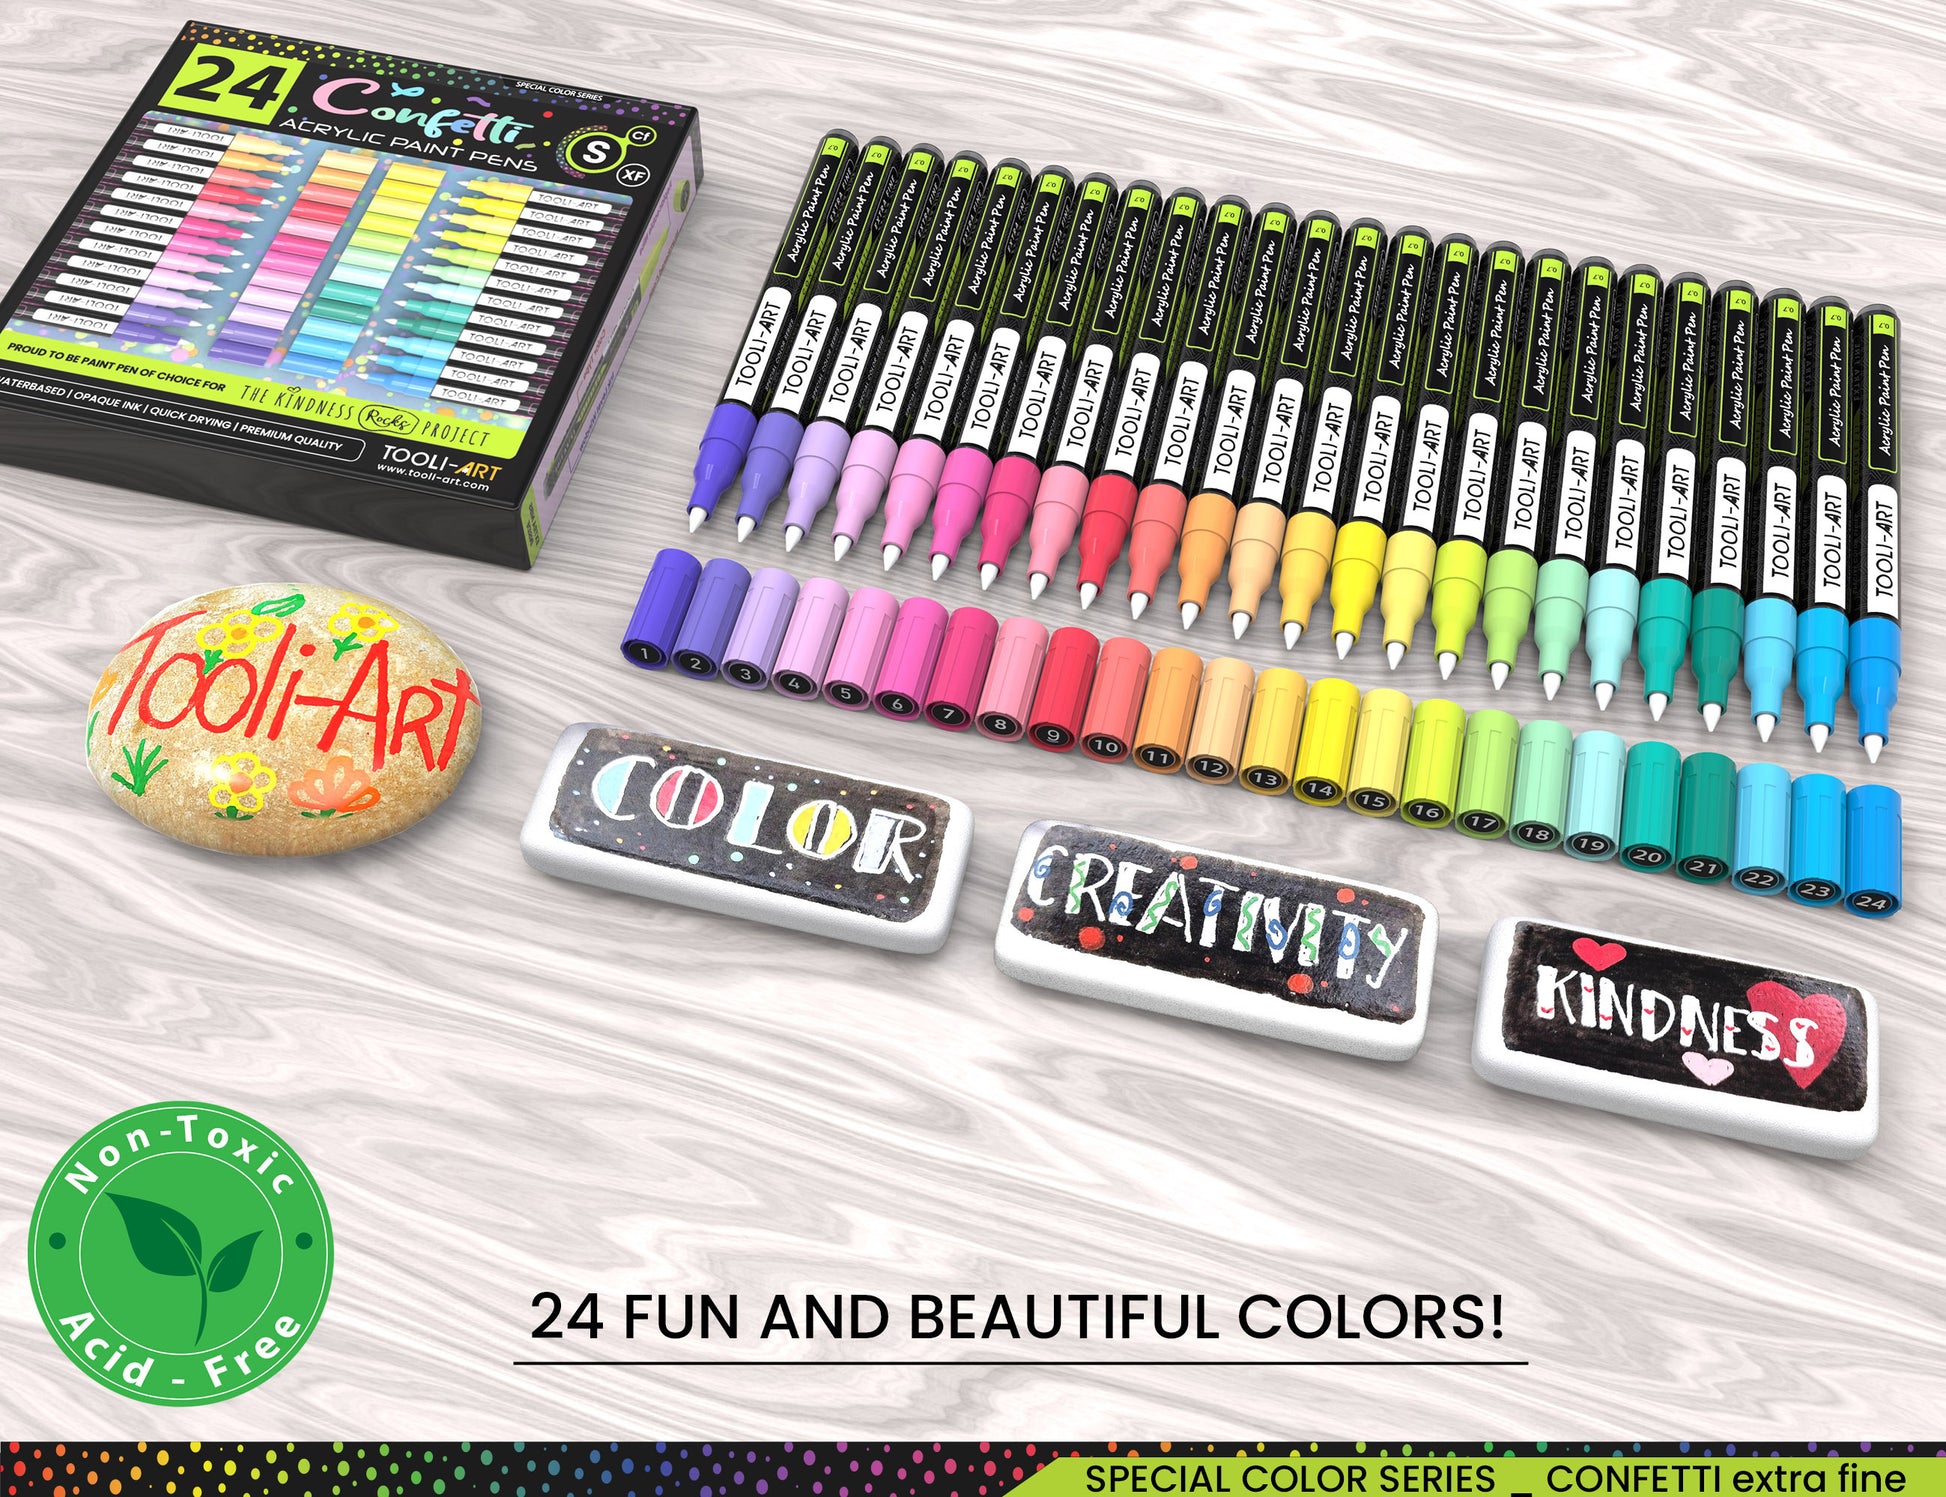  Acrylic Paint Markers, 14 Colors, 3mm Medium Tip Art